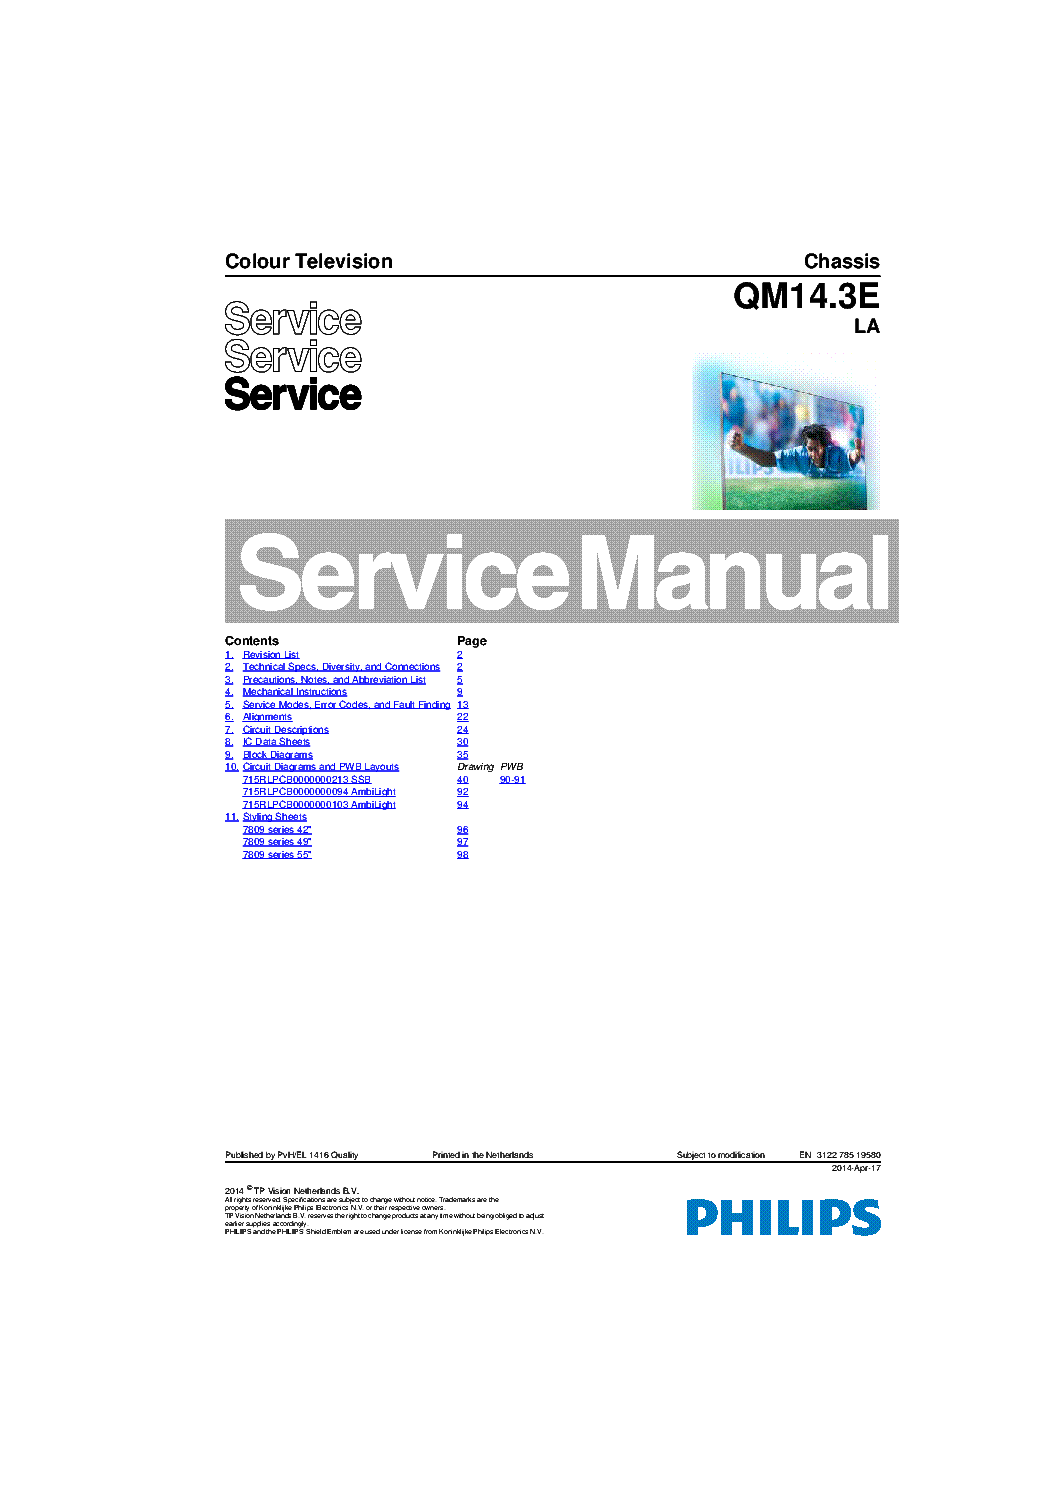 PHILIPS 55PUS7809-12 CHASSIS QM14.3E LA SM service manual (1st page)